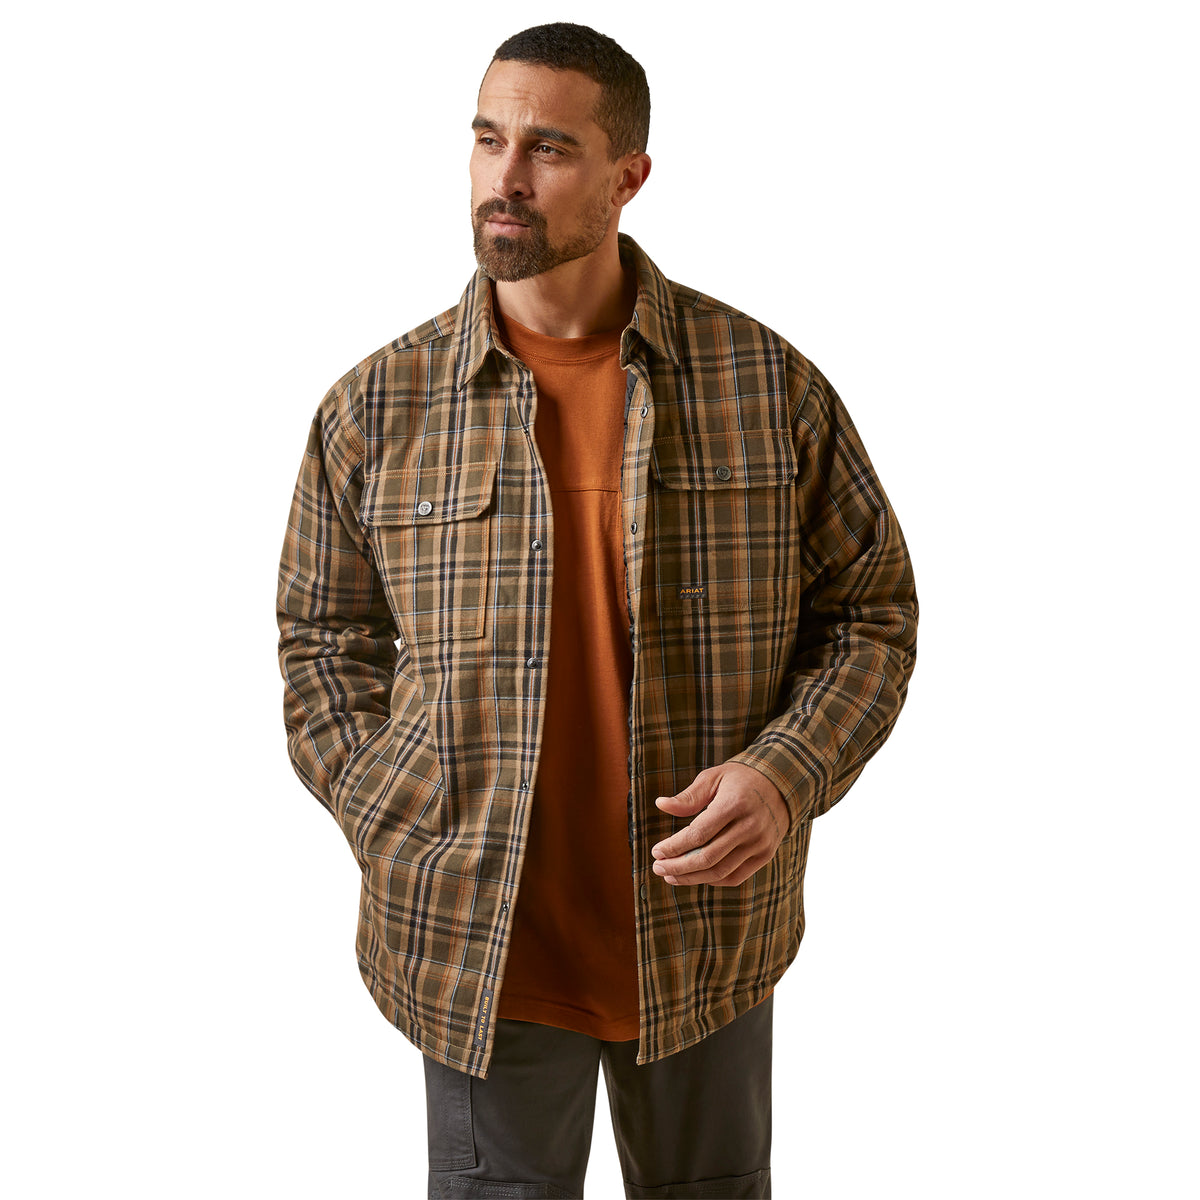 Ariat Mens Rebar Flannel Insulated Shirt Jacket - Wren Plaid